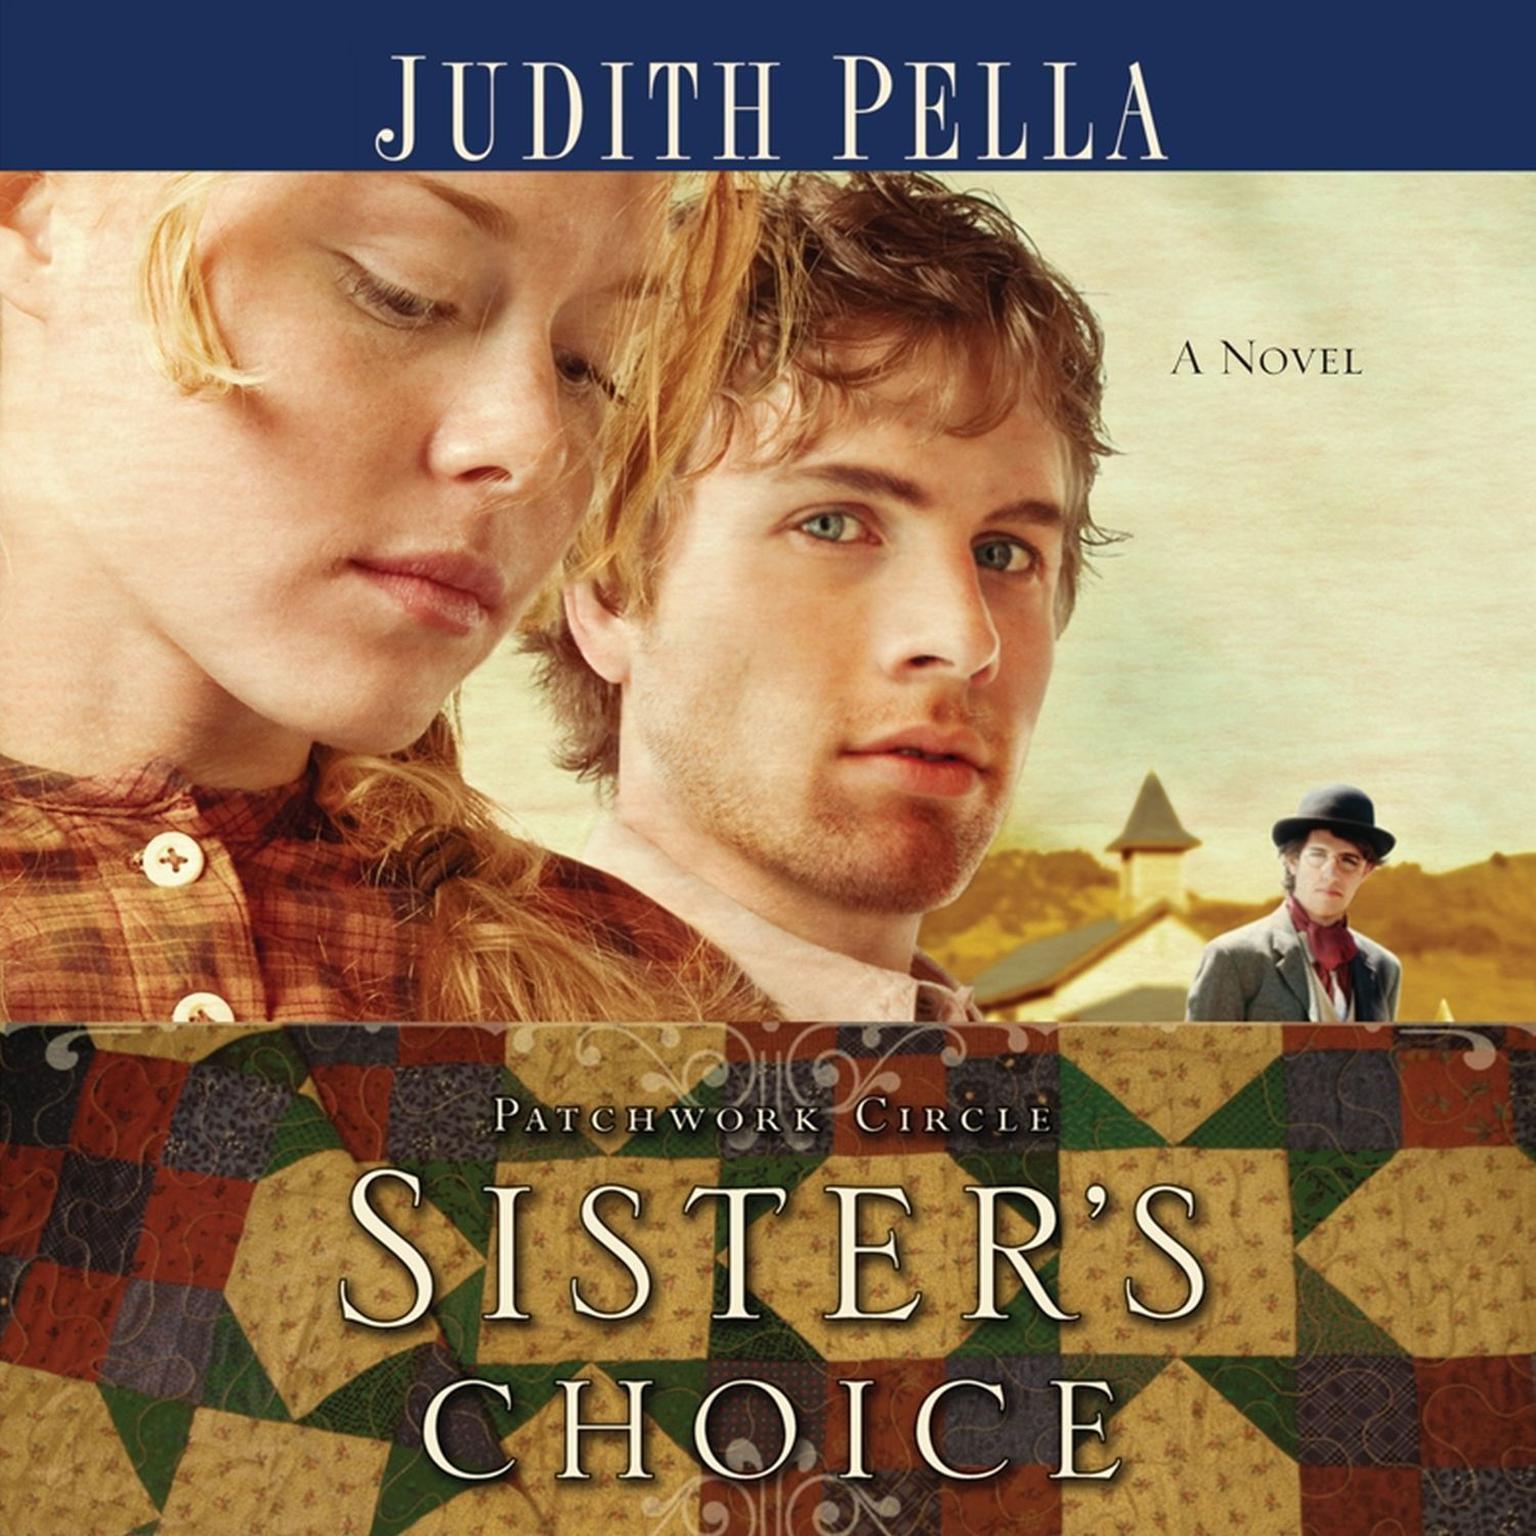 Sisters Choice (Abridged) Audiobook, by Judith Pella